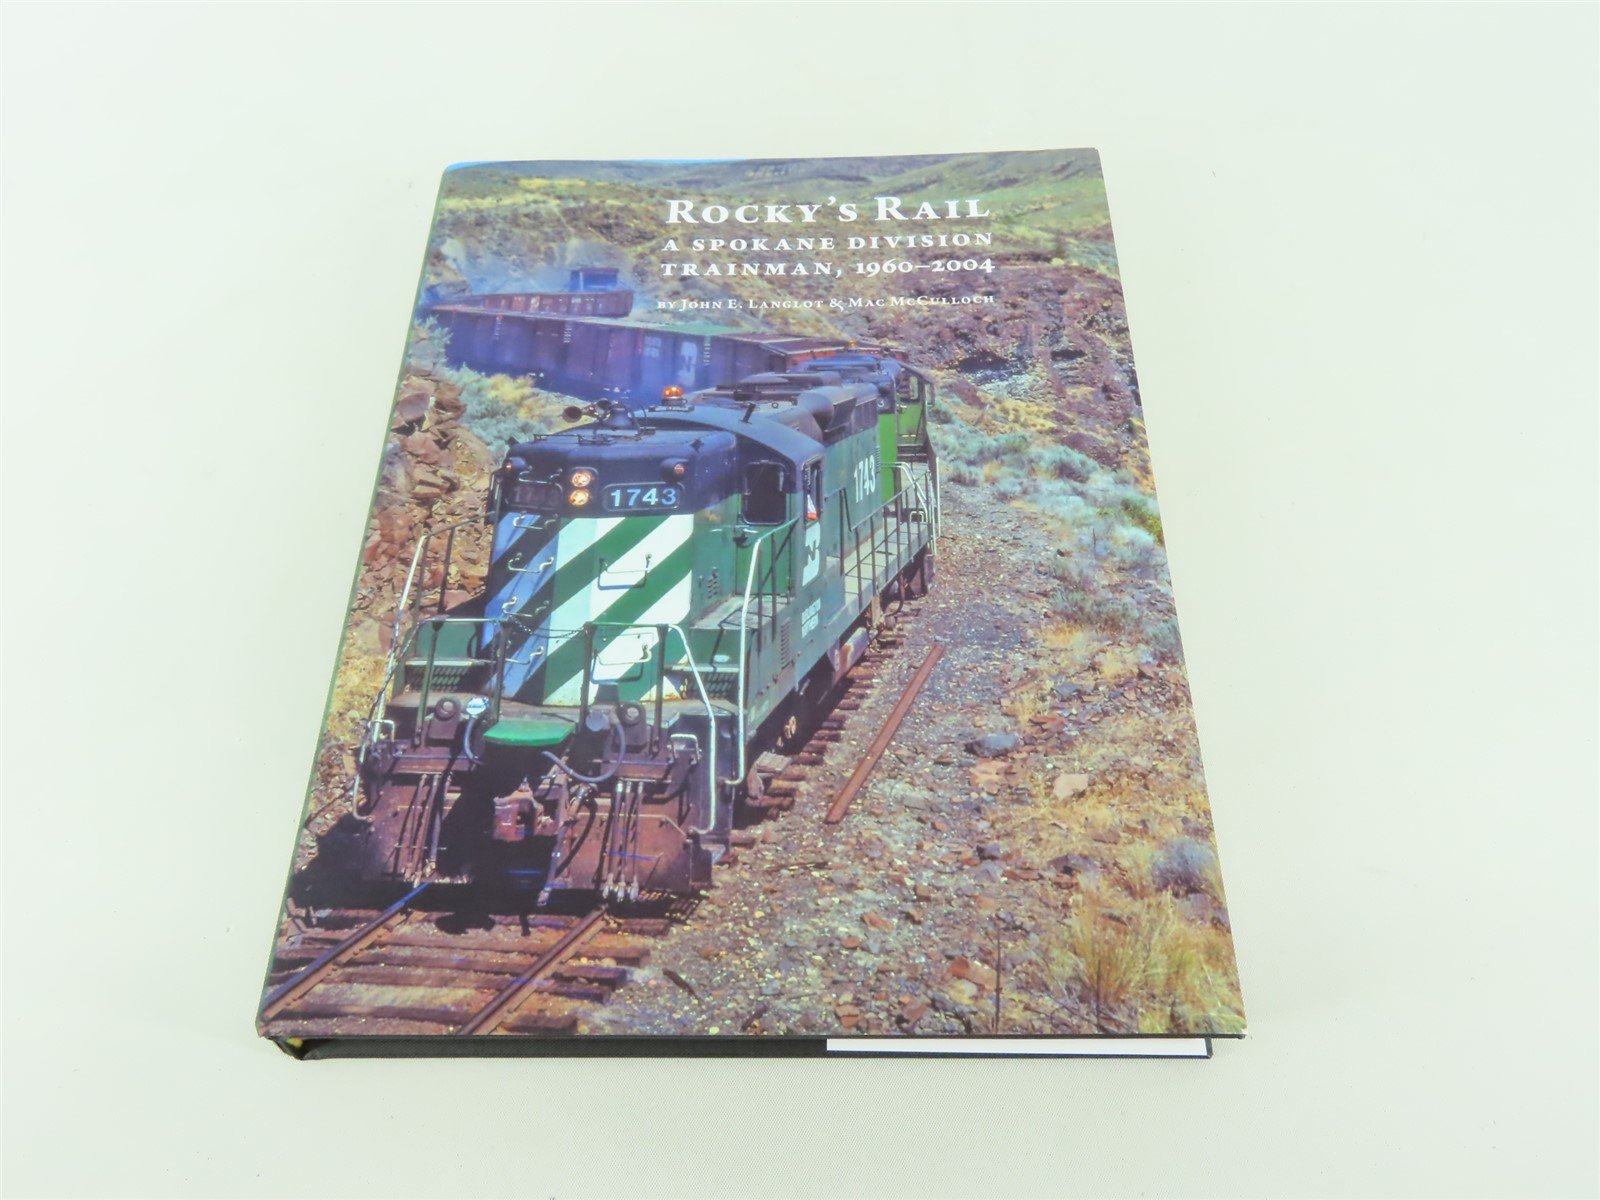 Rocky's Rail A Spokane Division Trainman 1960-2004 -Langlot & McCulloch ©2020 HC